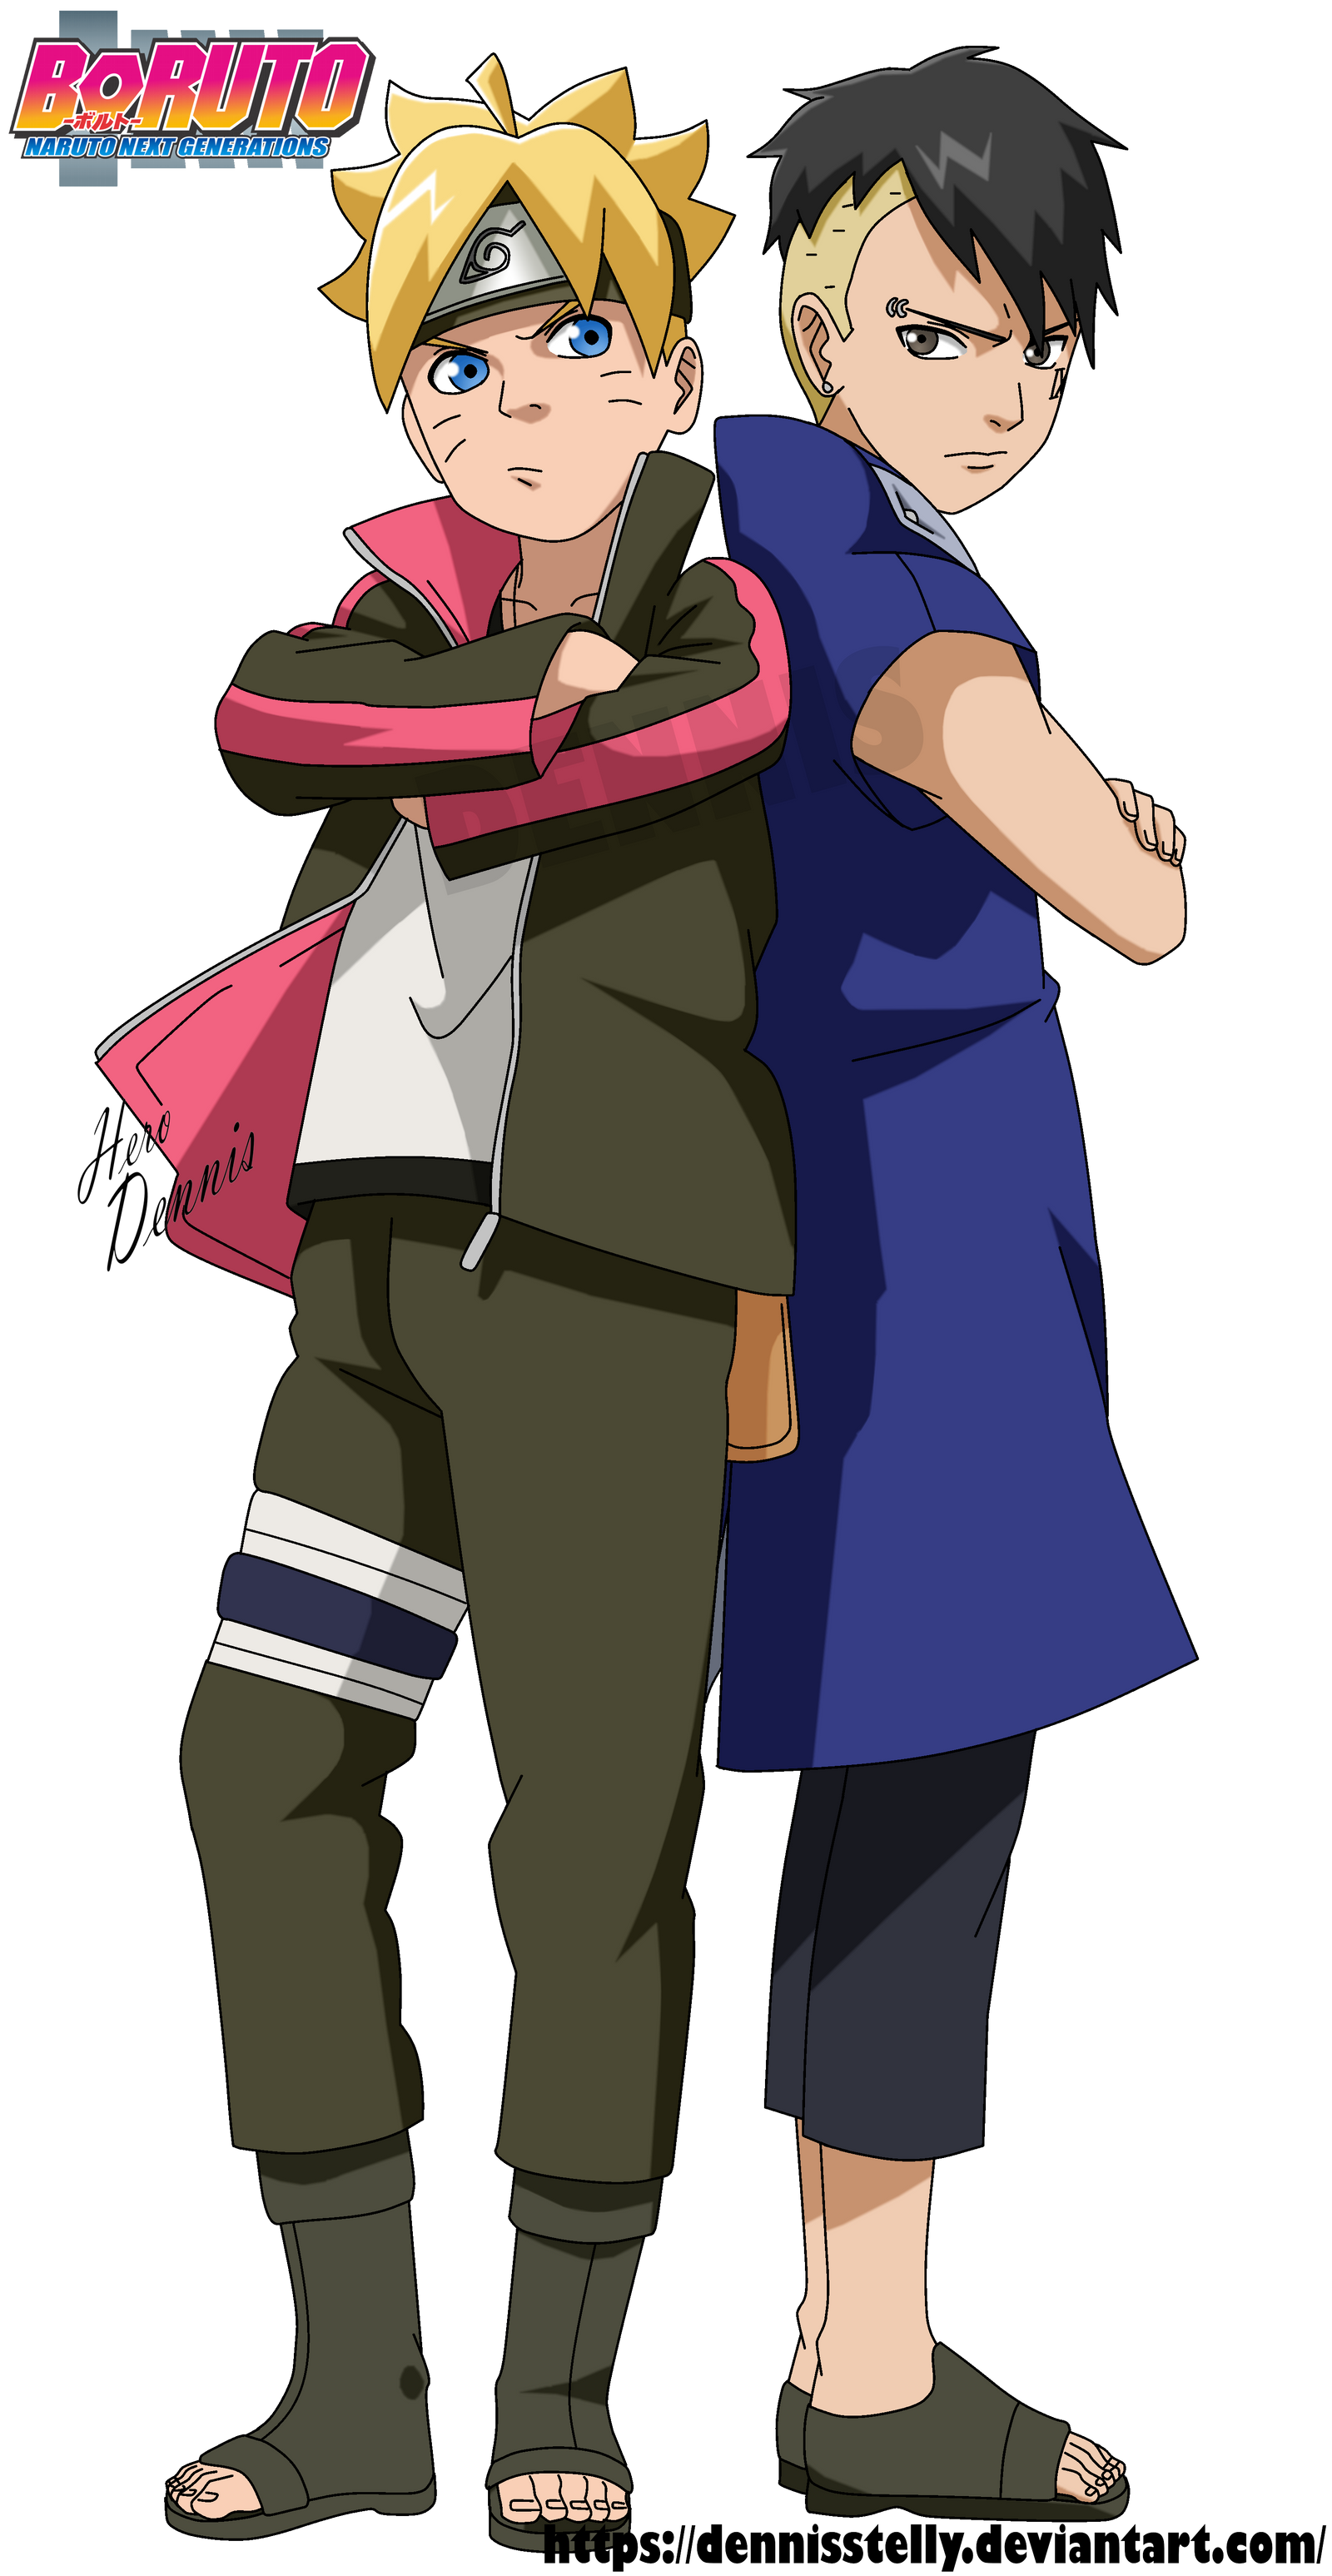 Boruto and Kawaki - Naruto Next Generation by DennisStelly on